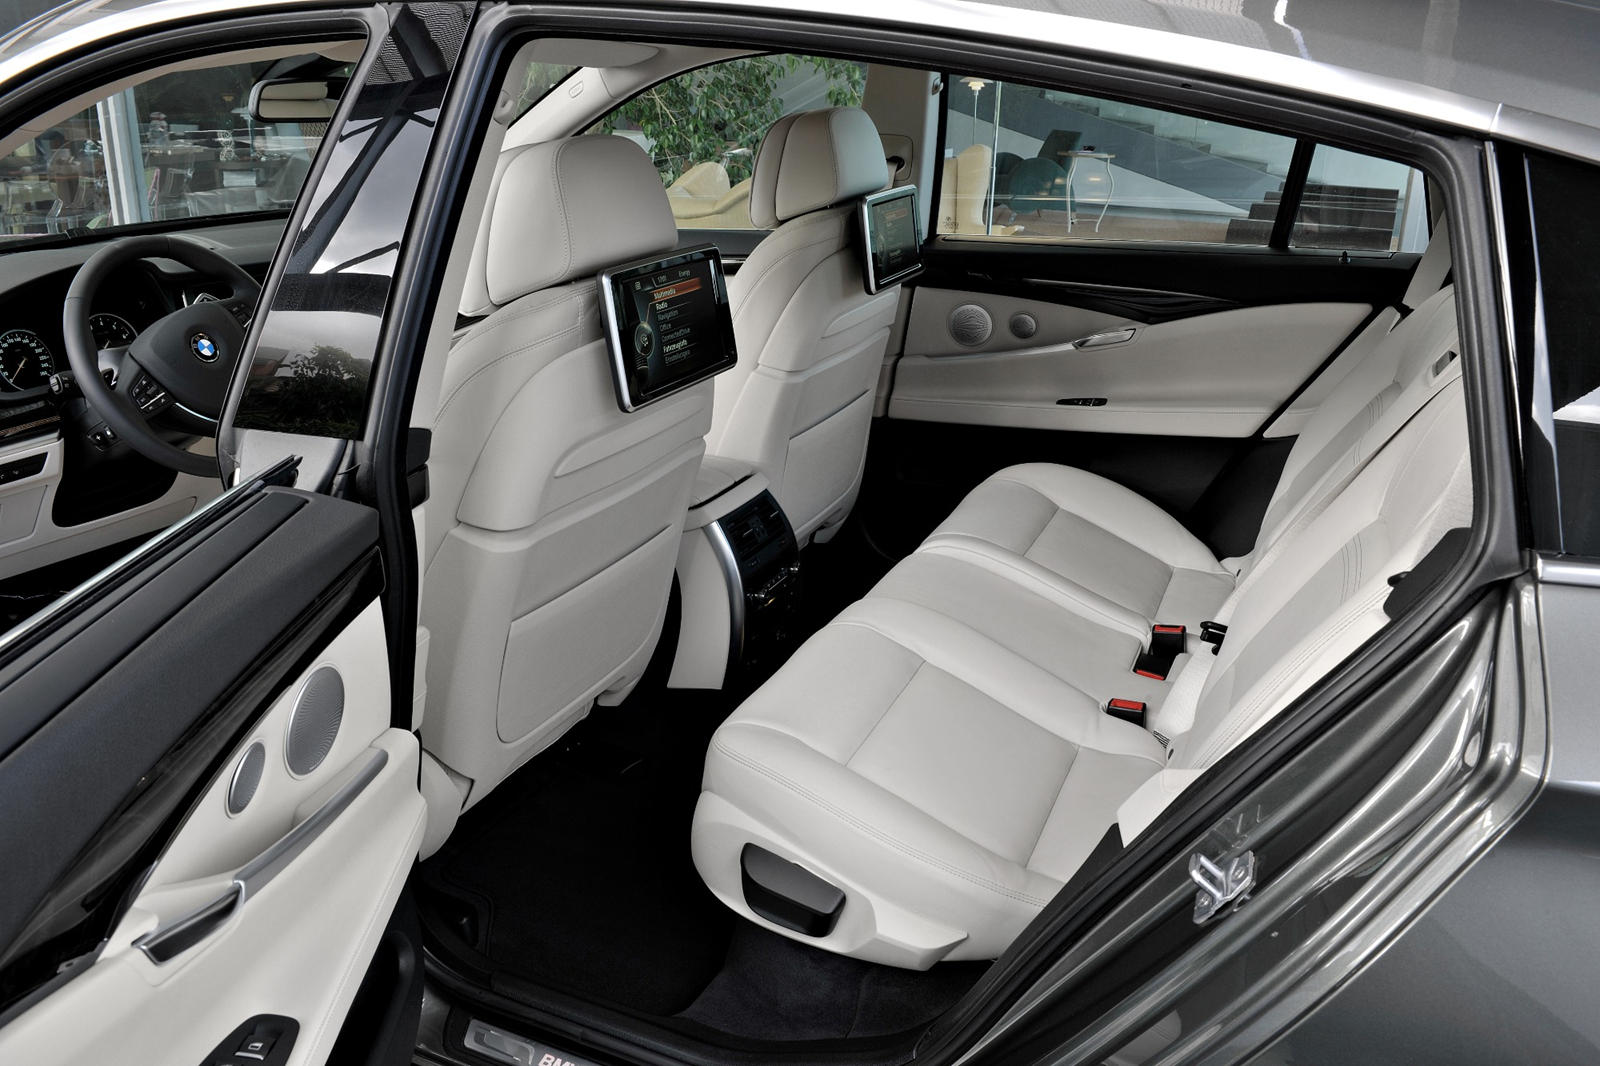 BMW 520 Gran Turismo interior - Seats